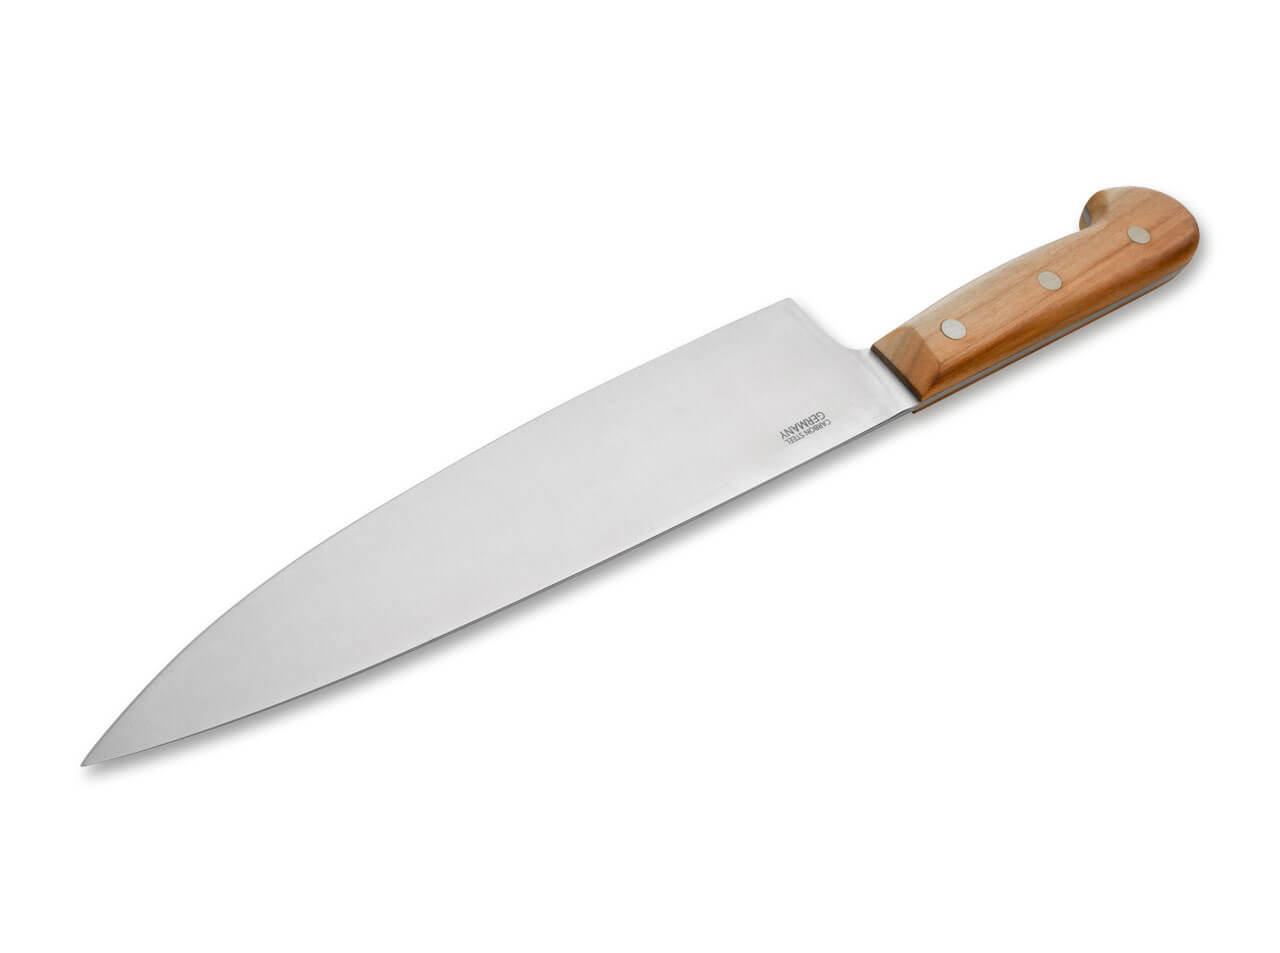 Boker Cottage-Craft Large Chef's Knife 8.66 inch C75 Carbon Steel Satin  Blade, Plum Wood Handles